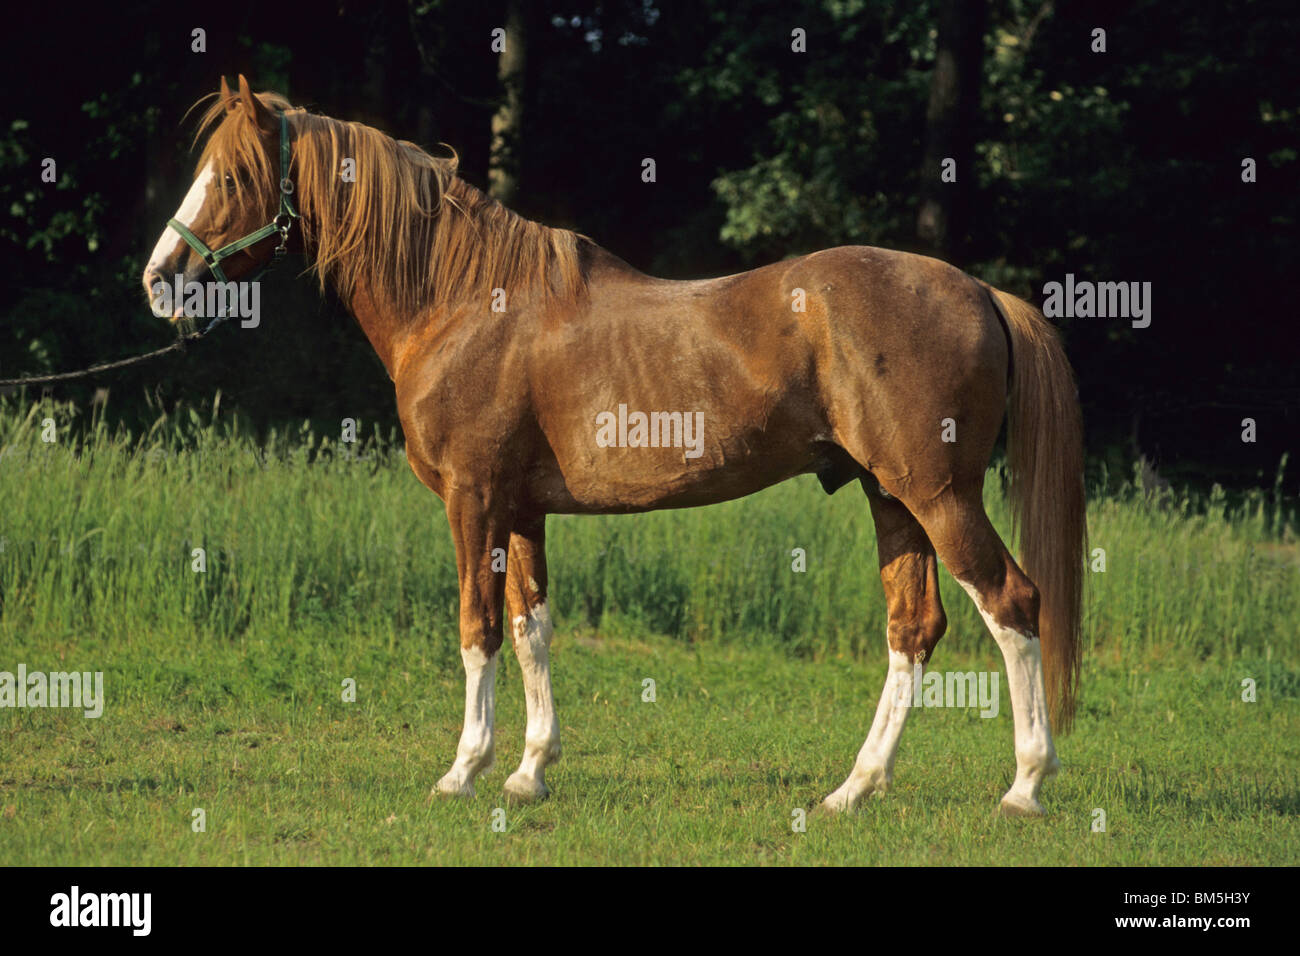 Mangalarga Paulista (Equus ferus caballus), stallion standing on a meadow. Stock Photo